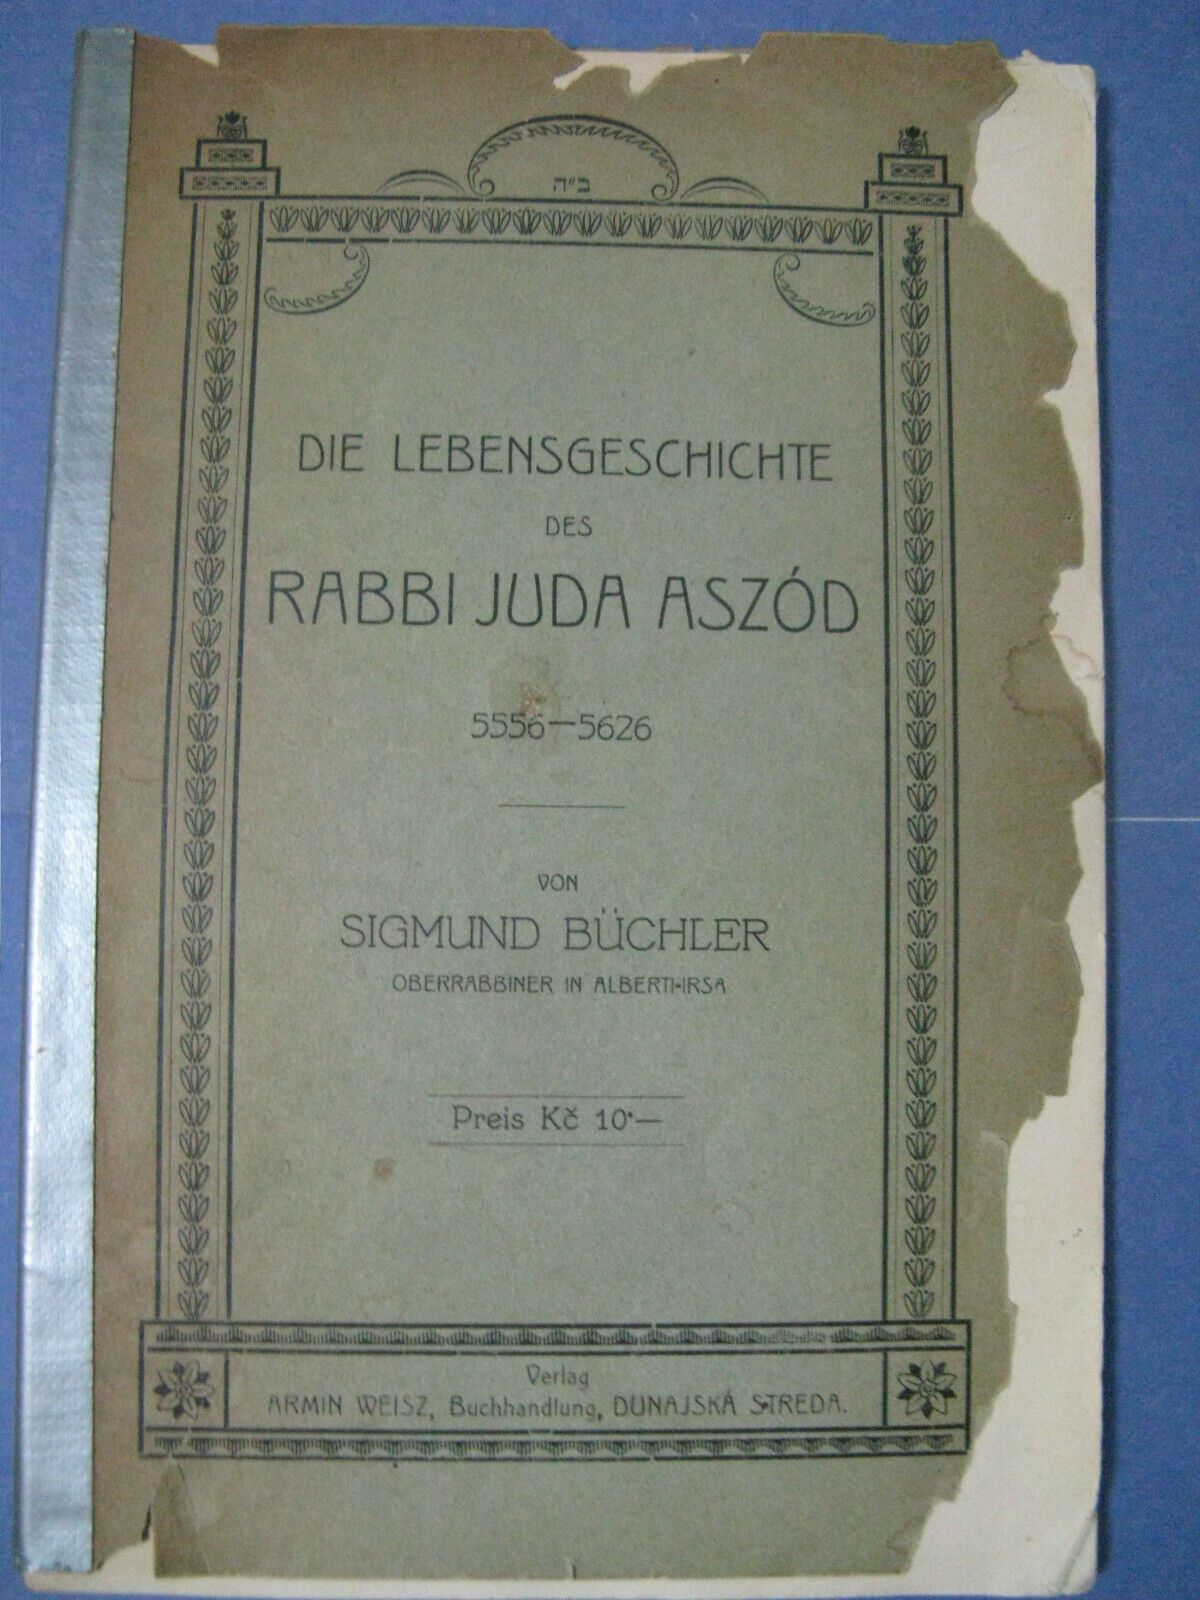 1933 Die Lebensgeschichte Des Rabbi Juda Aszod Oberrabiner In Alberti-Irsa